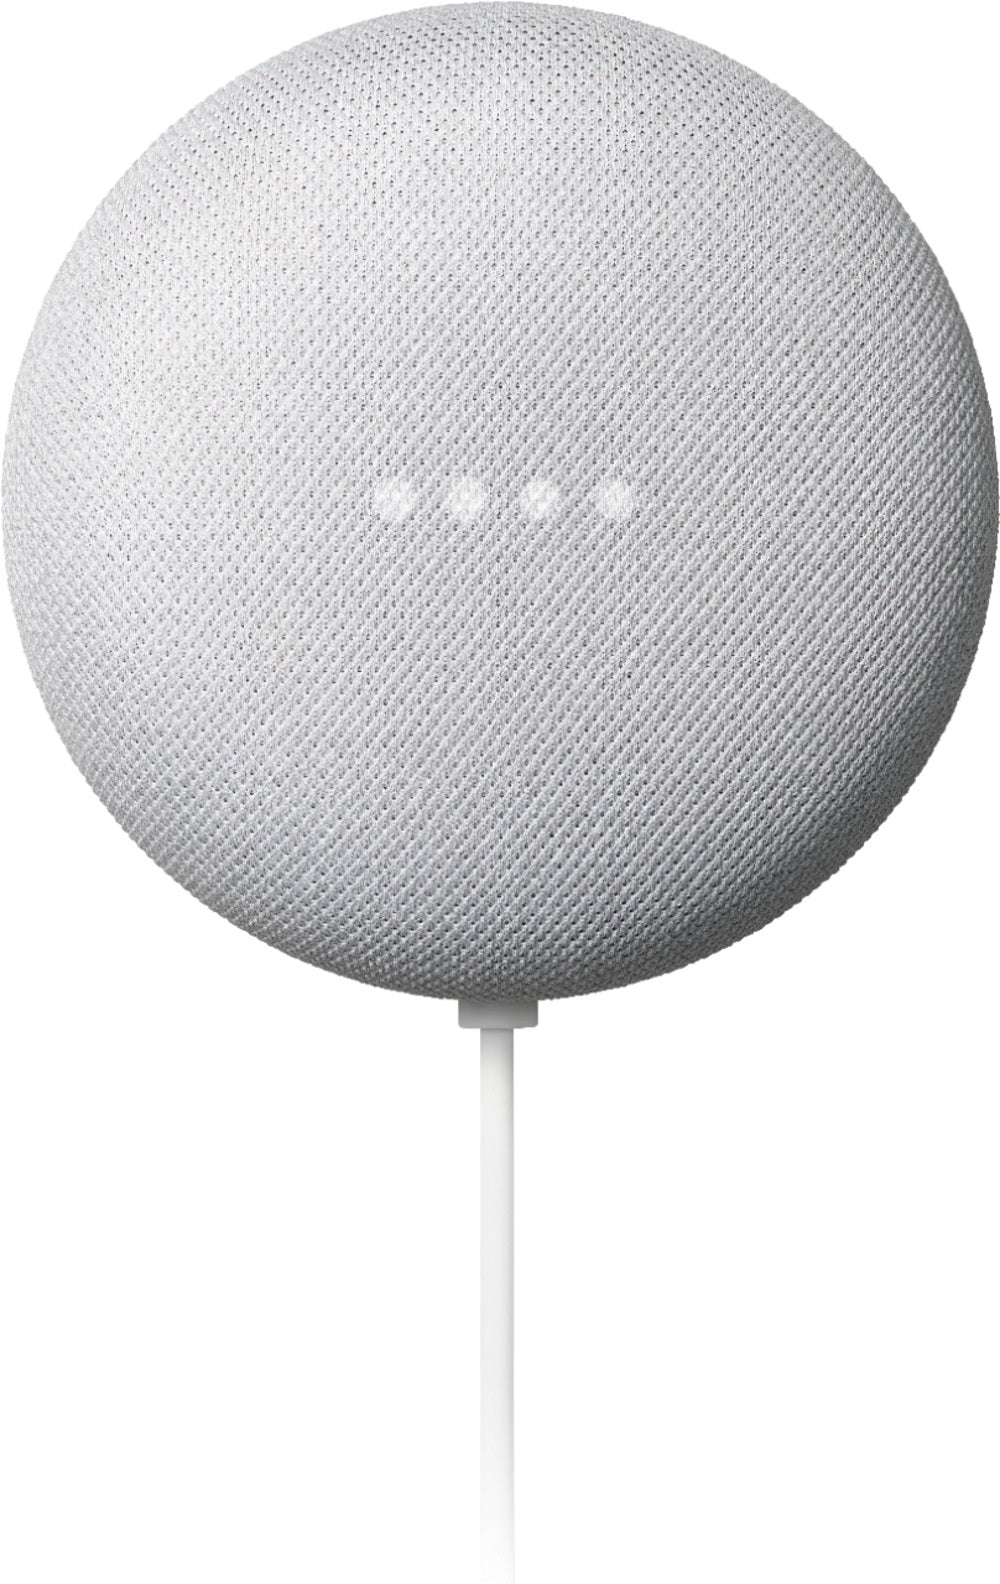 Google Nest Mini 2nd Generation Smart Speaker with Google Assistant - Chalk (Certified Refurbished)